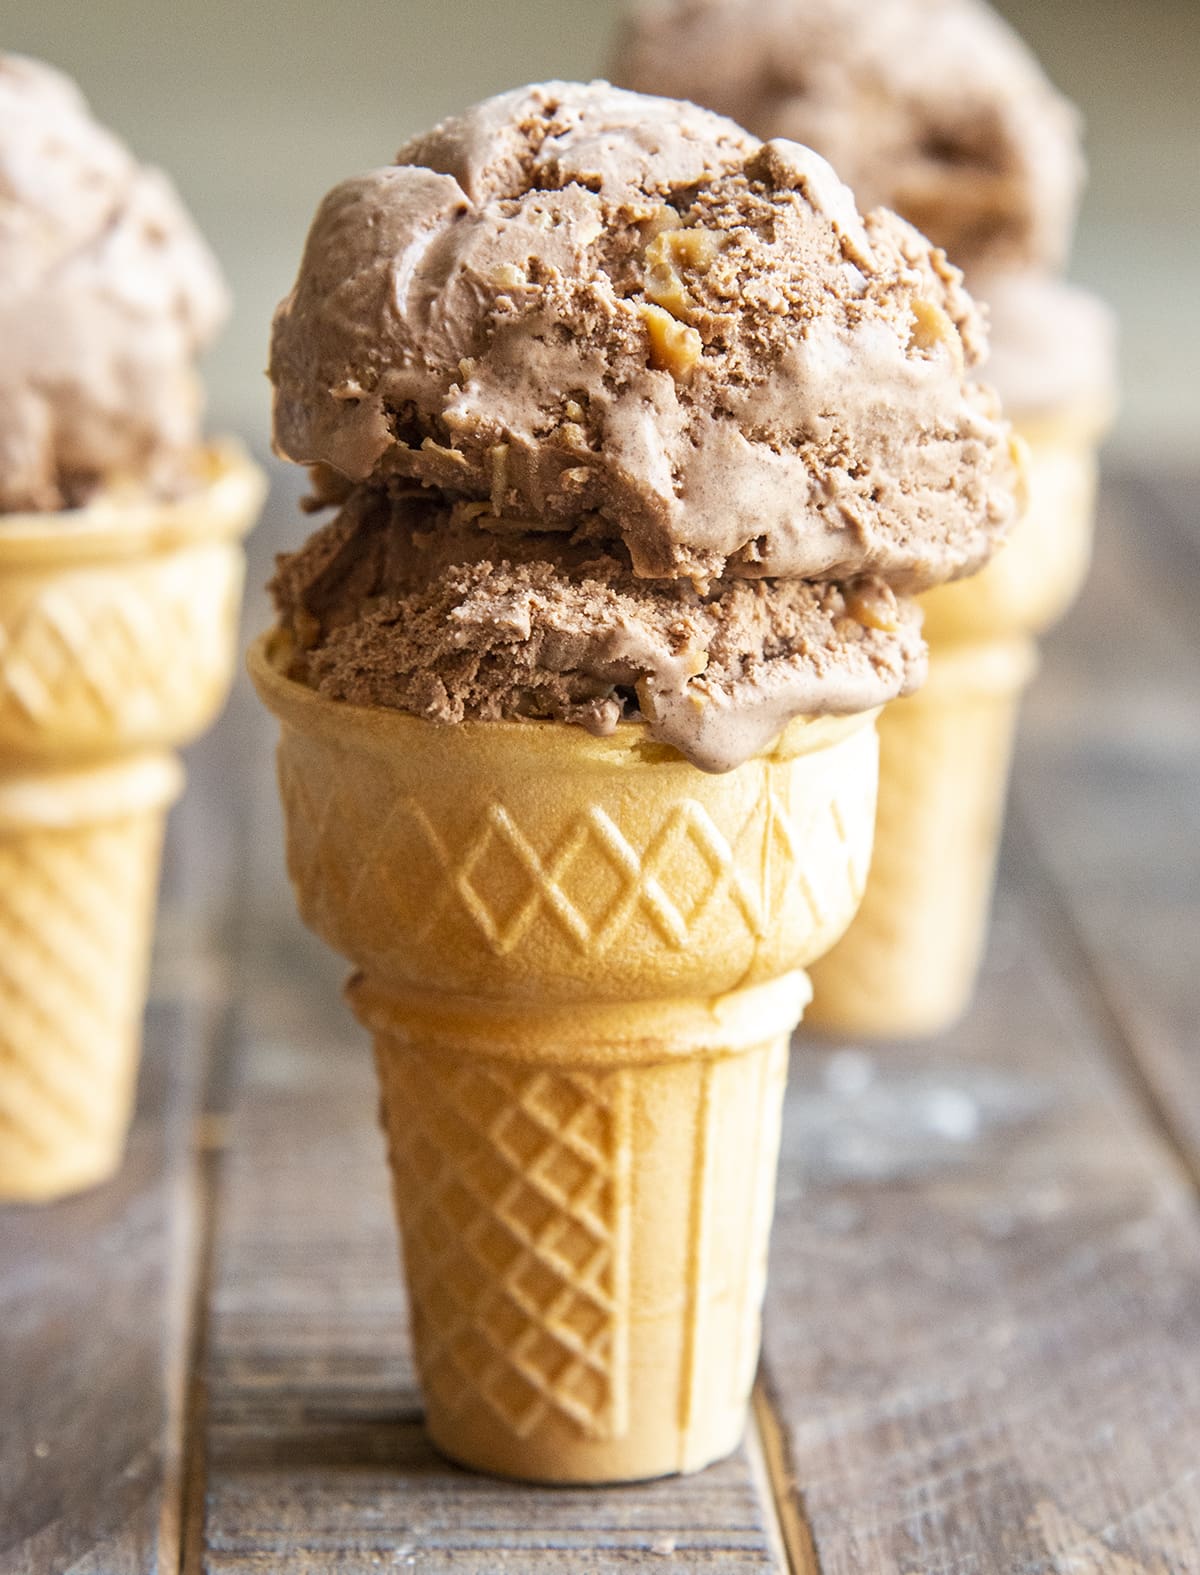 An ice cream cone of chocolate peanut butter ice cream.